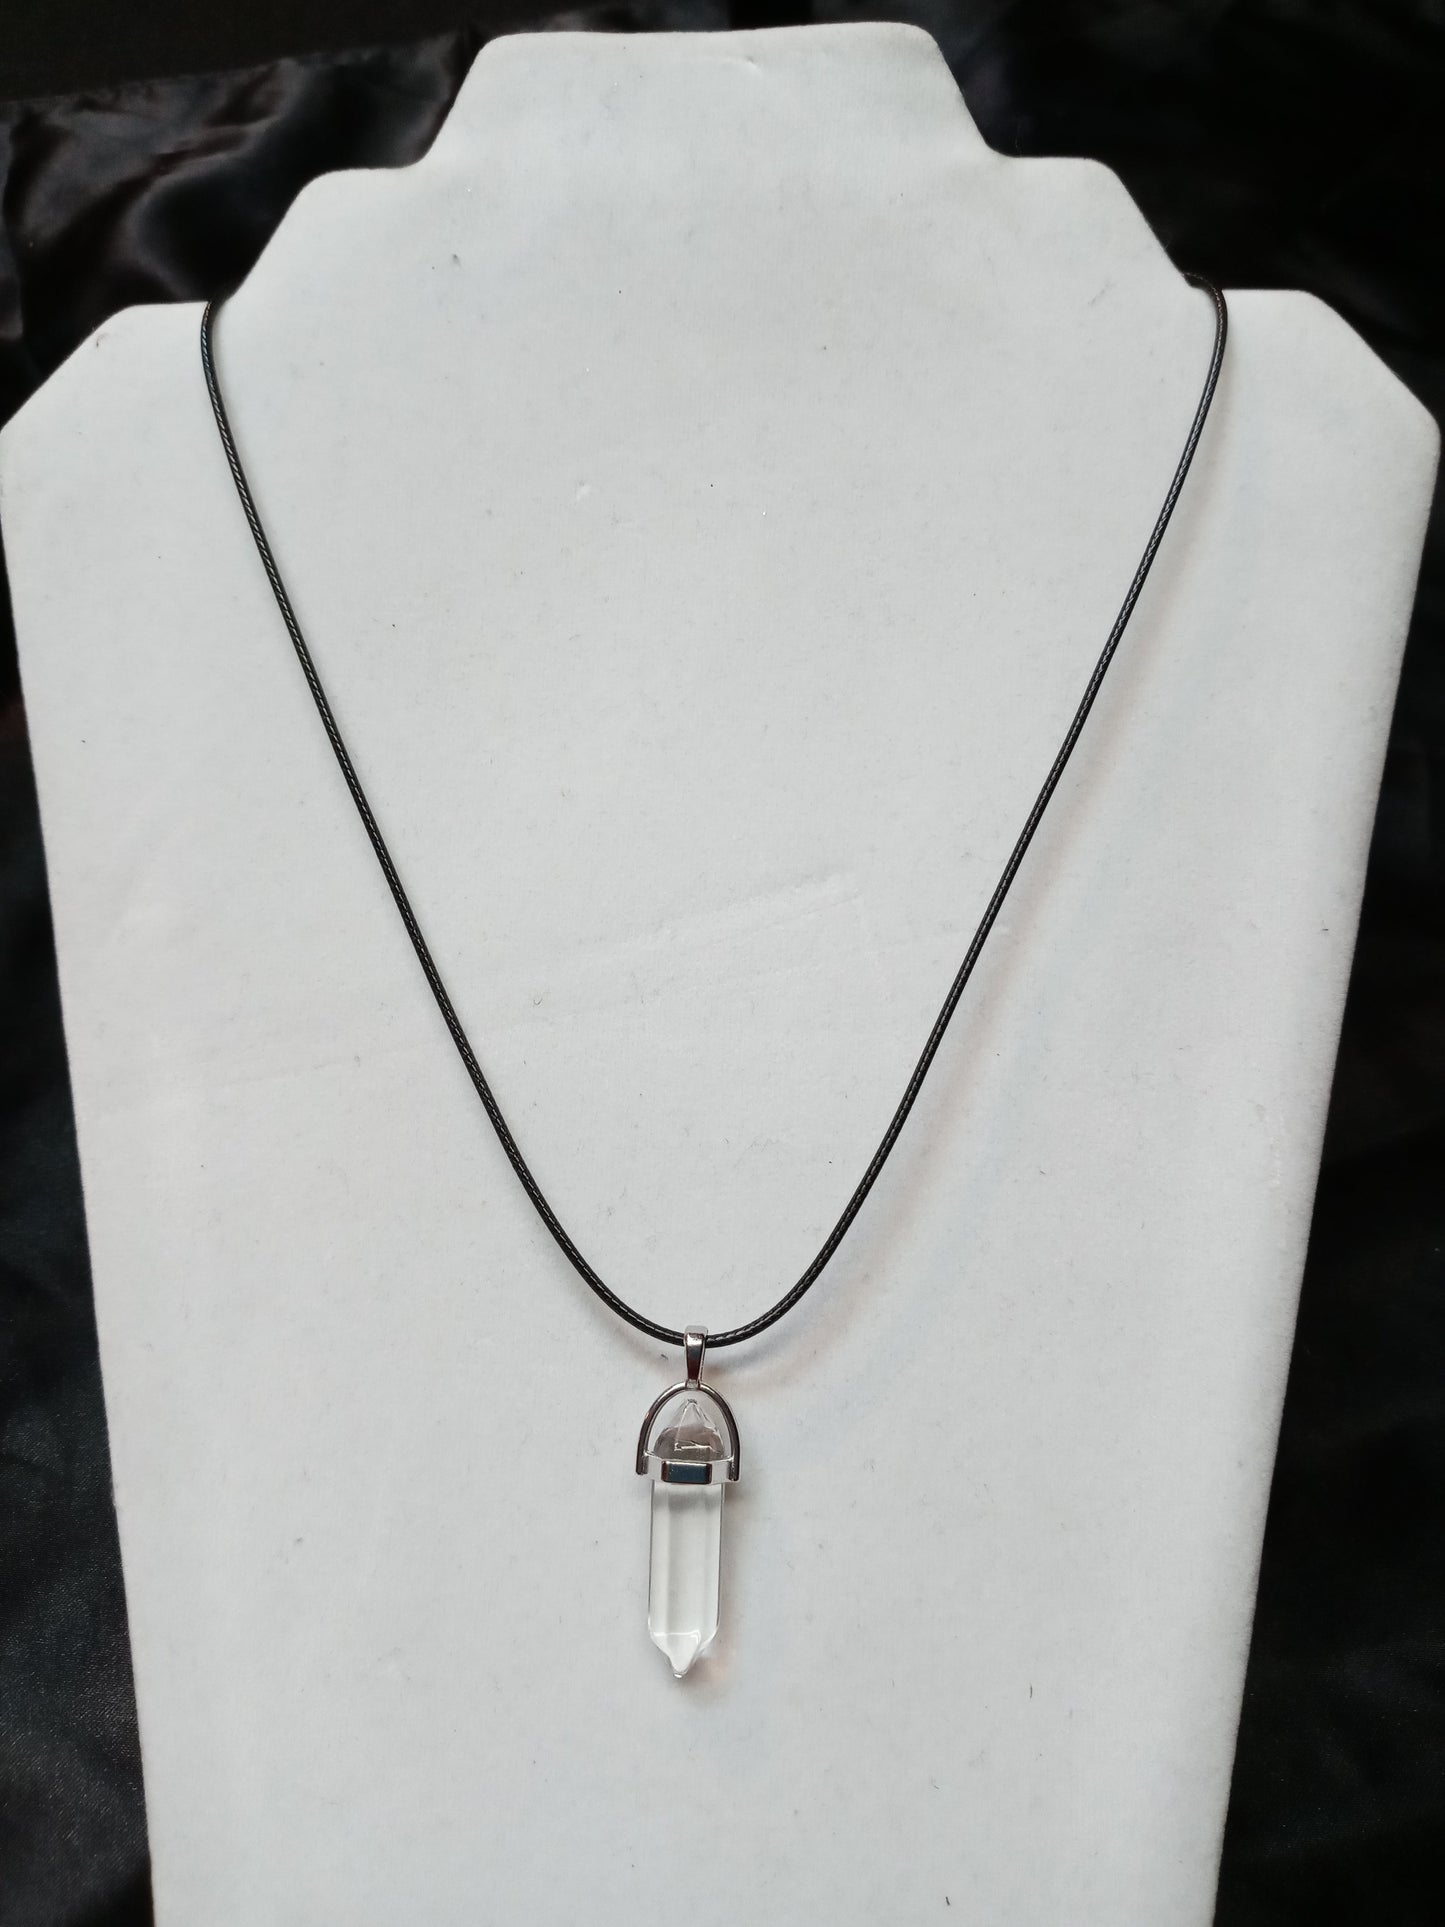 Bullet Shape Healing Stones with Black Paracord Necklace - Quartz Crystal